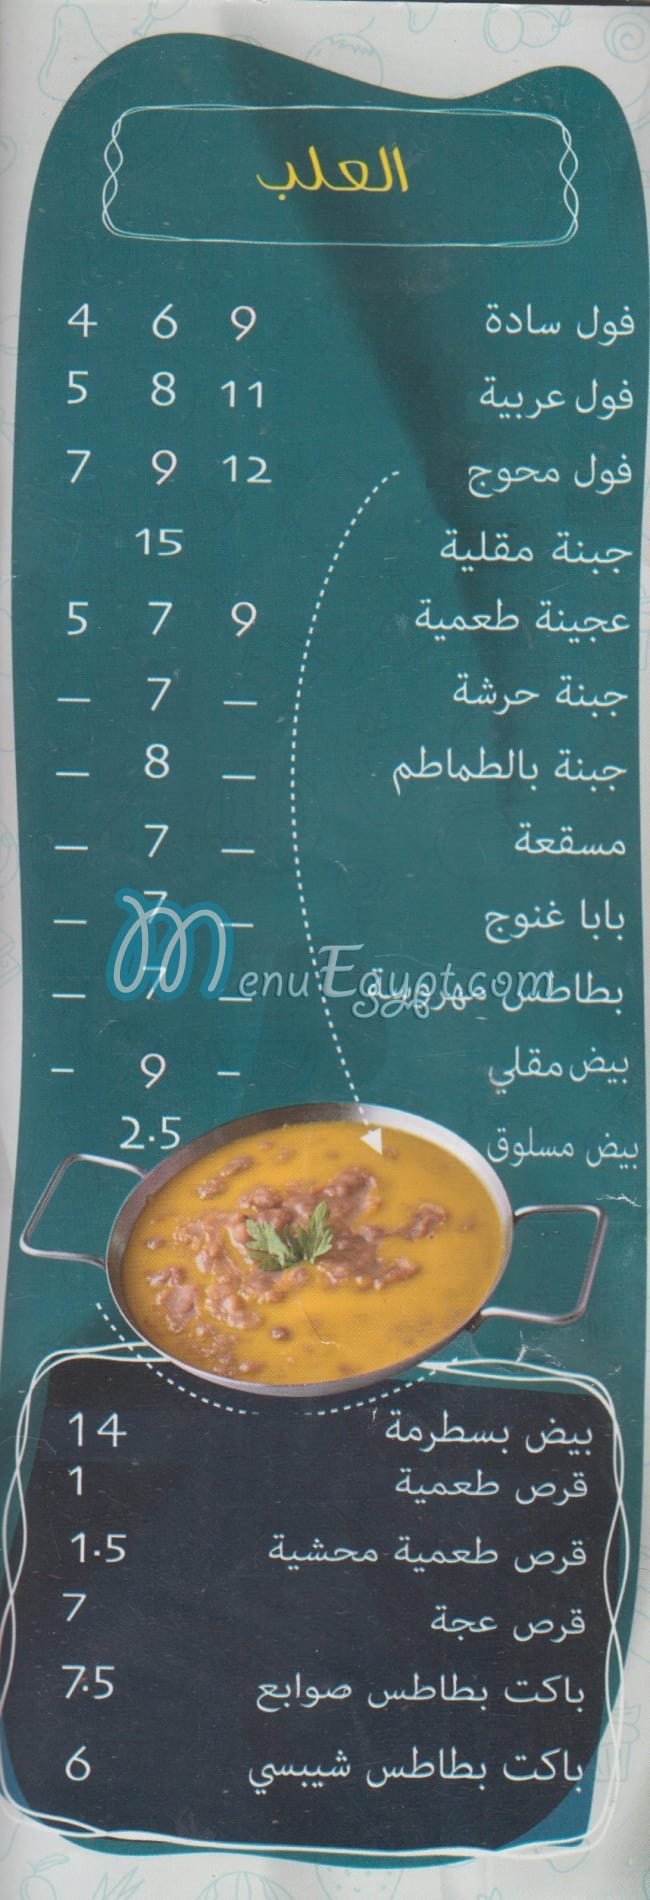 Marzouka Restaurant delivery menu